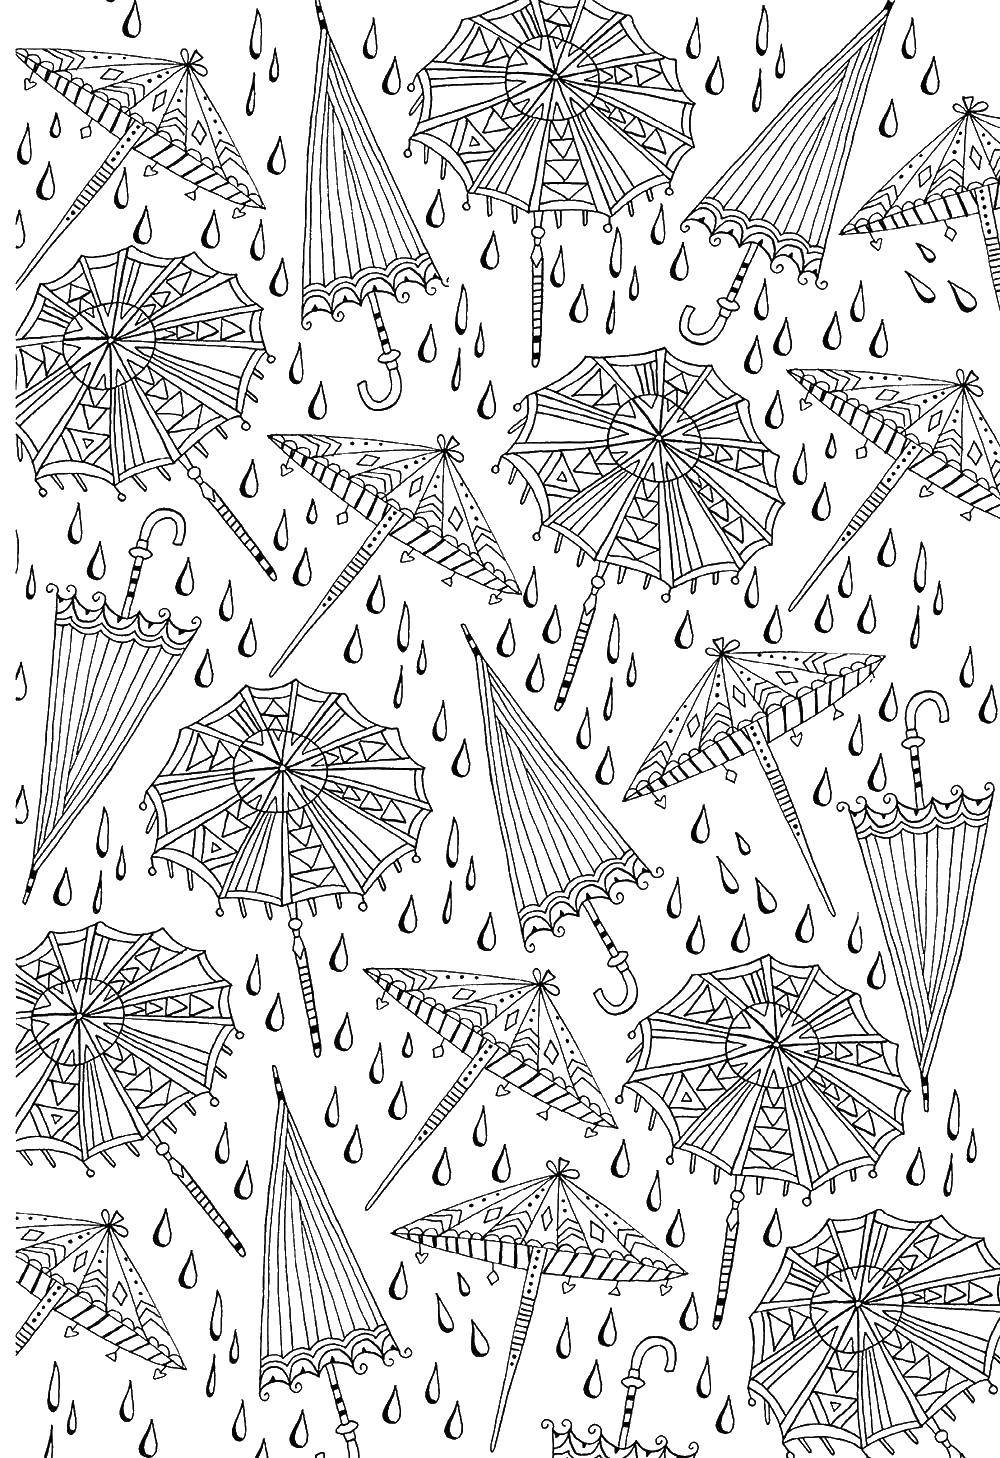 Coloring Umbrellas. Category coloring antistress. Tags:  umbrellas.